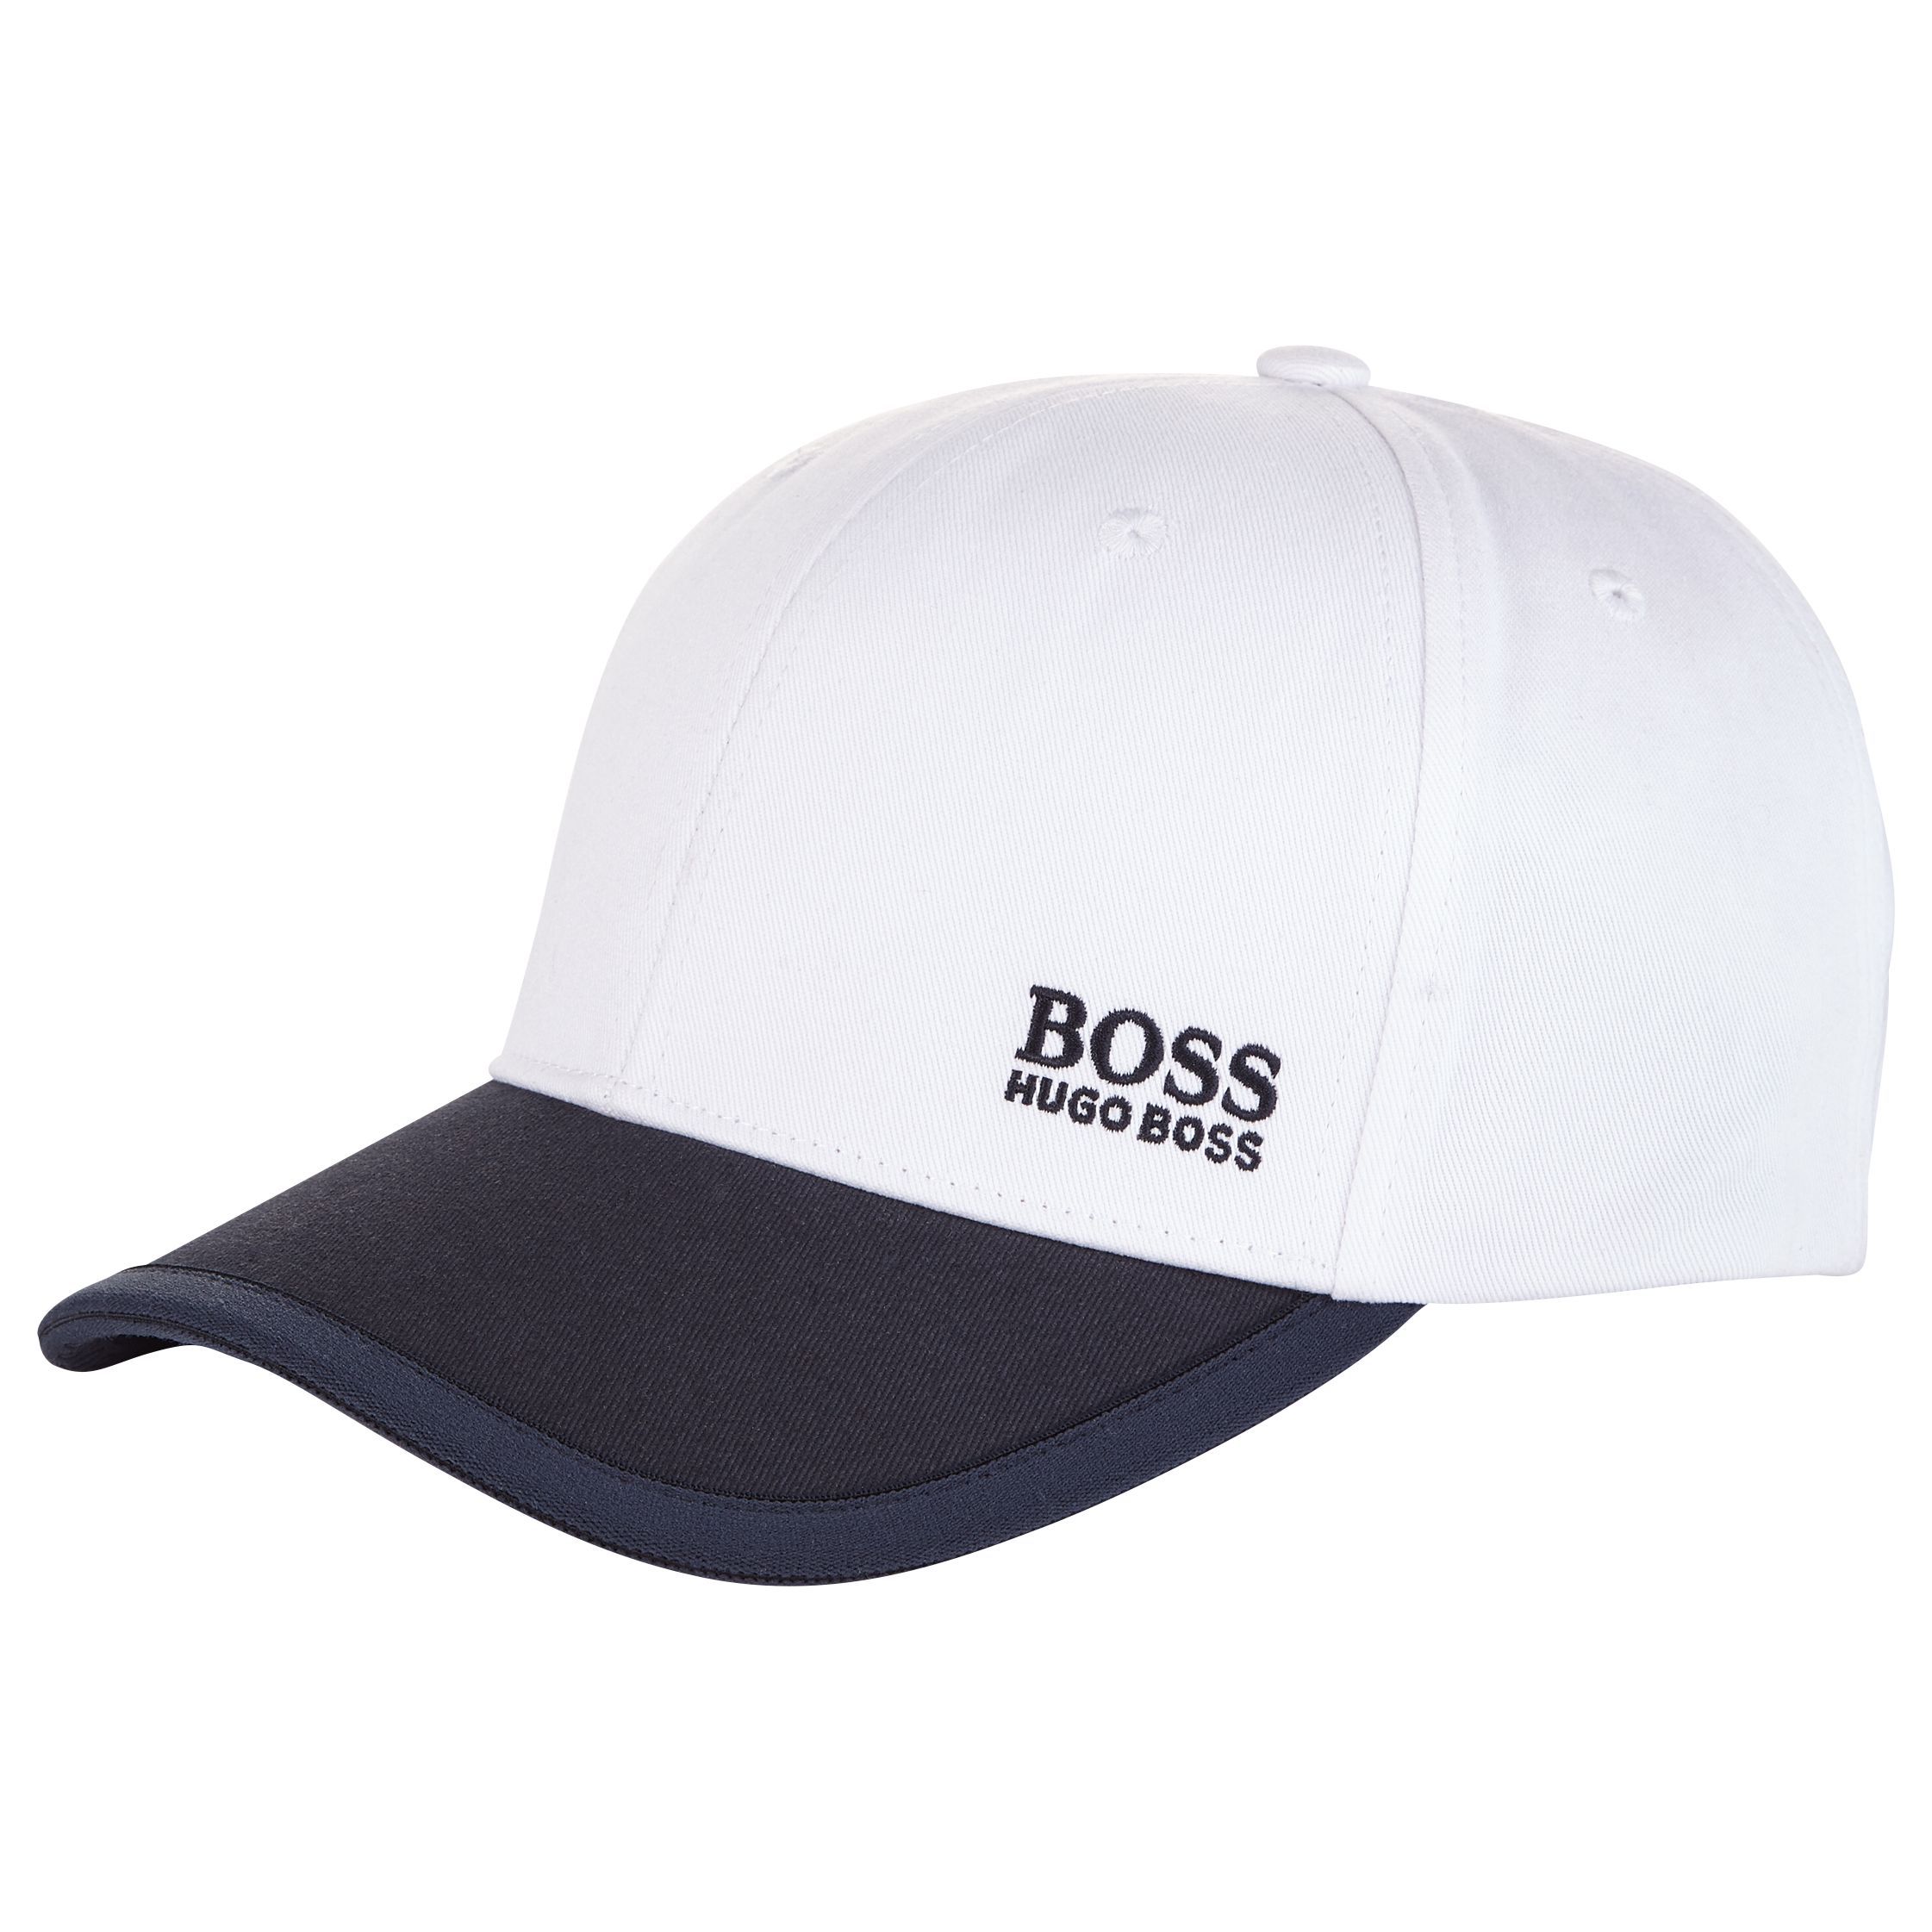 hugo boss golf hat